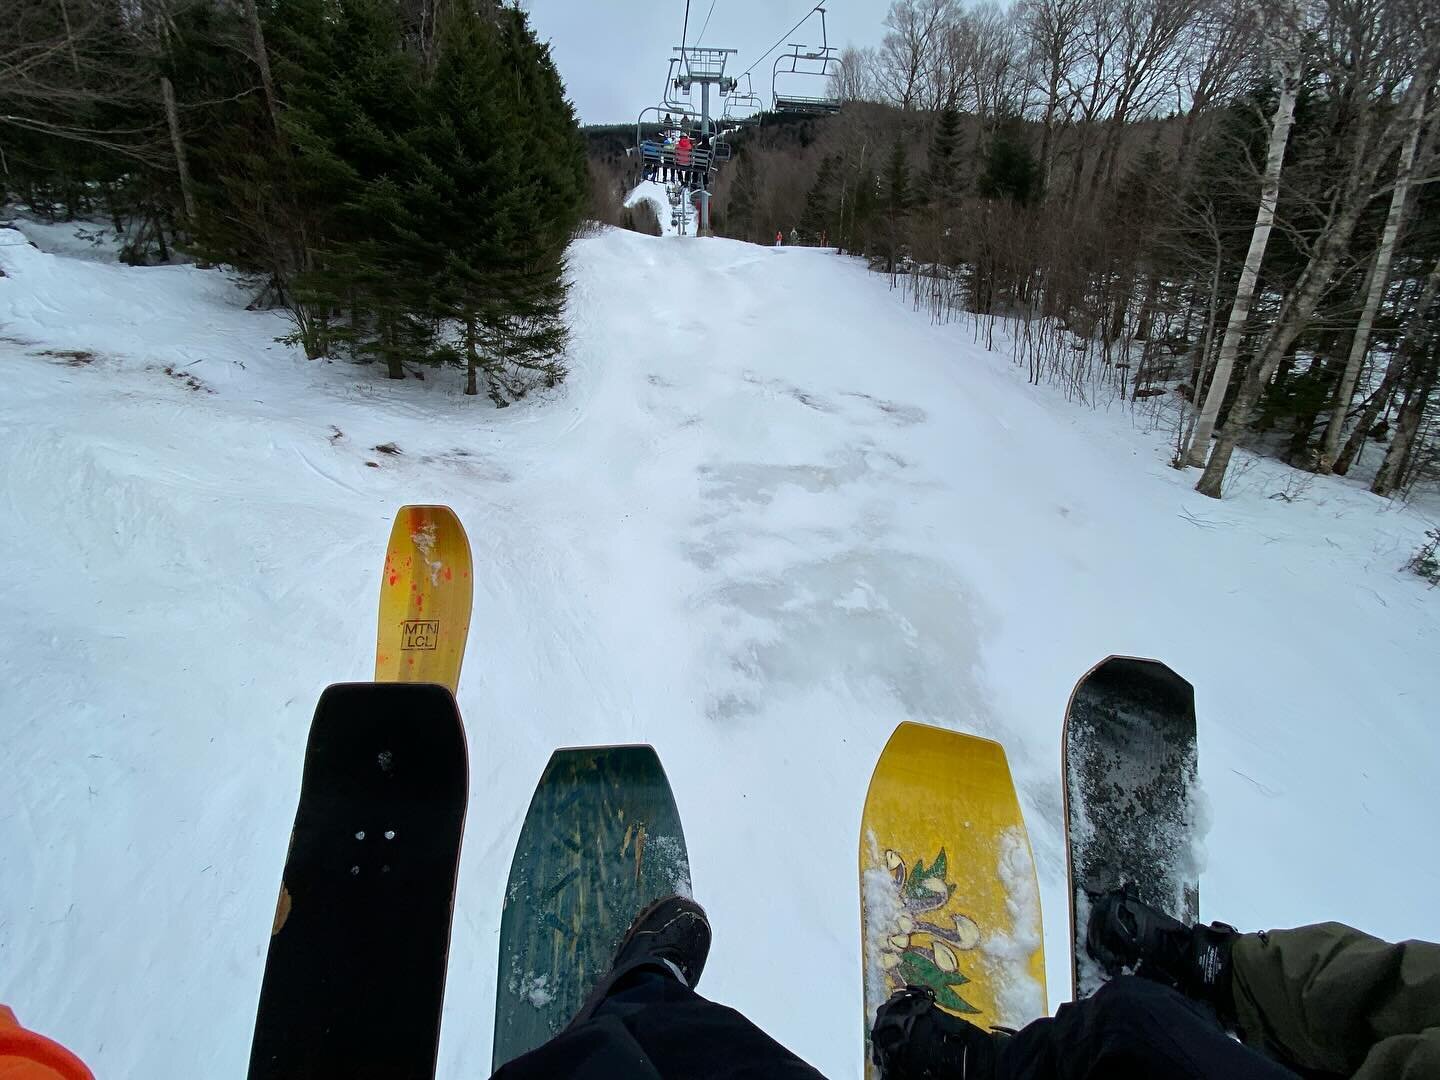 Filling a quad w MTN Local!

#woodcarver
#snowboard
#splitboard
#snowskate
#madeforturning
#fasterthanyou
#premium
#handmade
#original
#shapes
#alwaysgo
#snowboarding
#getoutside
#snow
#life
#lifestyle
#livetoride